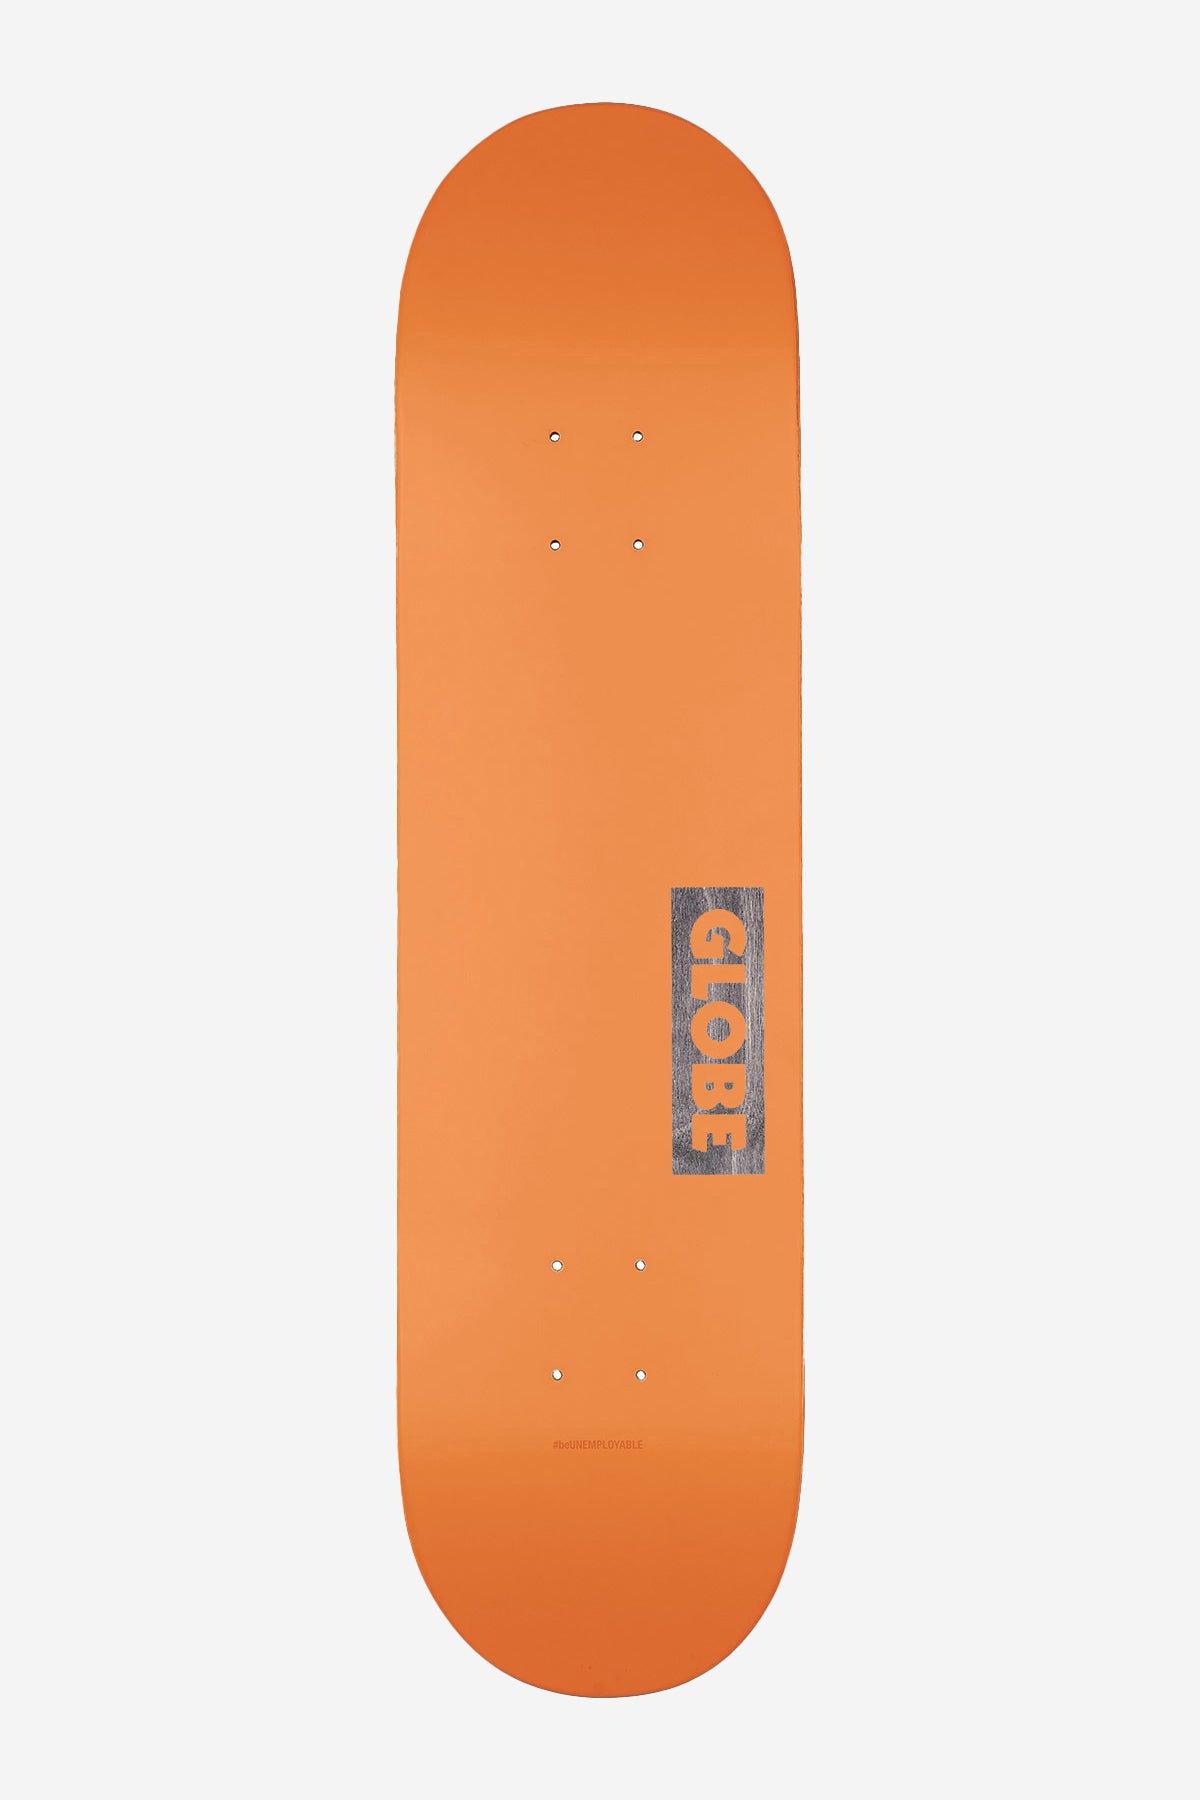 Globe - Goodstock - Neon Orange - 8.125" Skateboard Deck